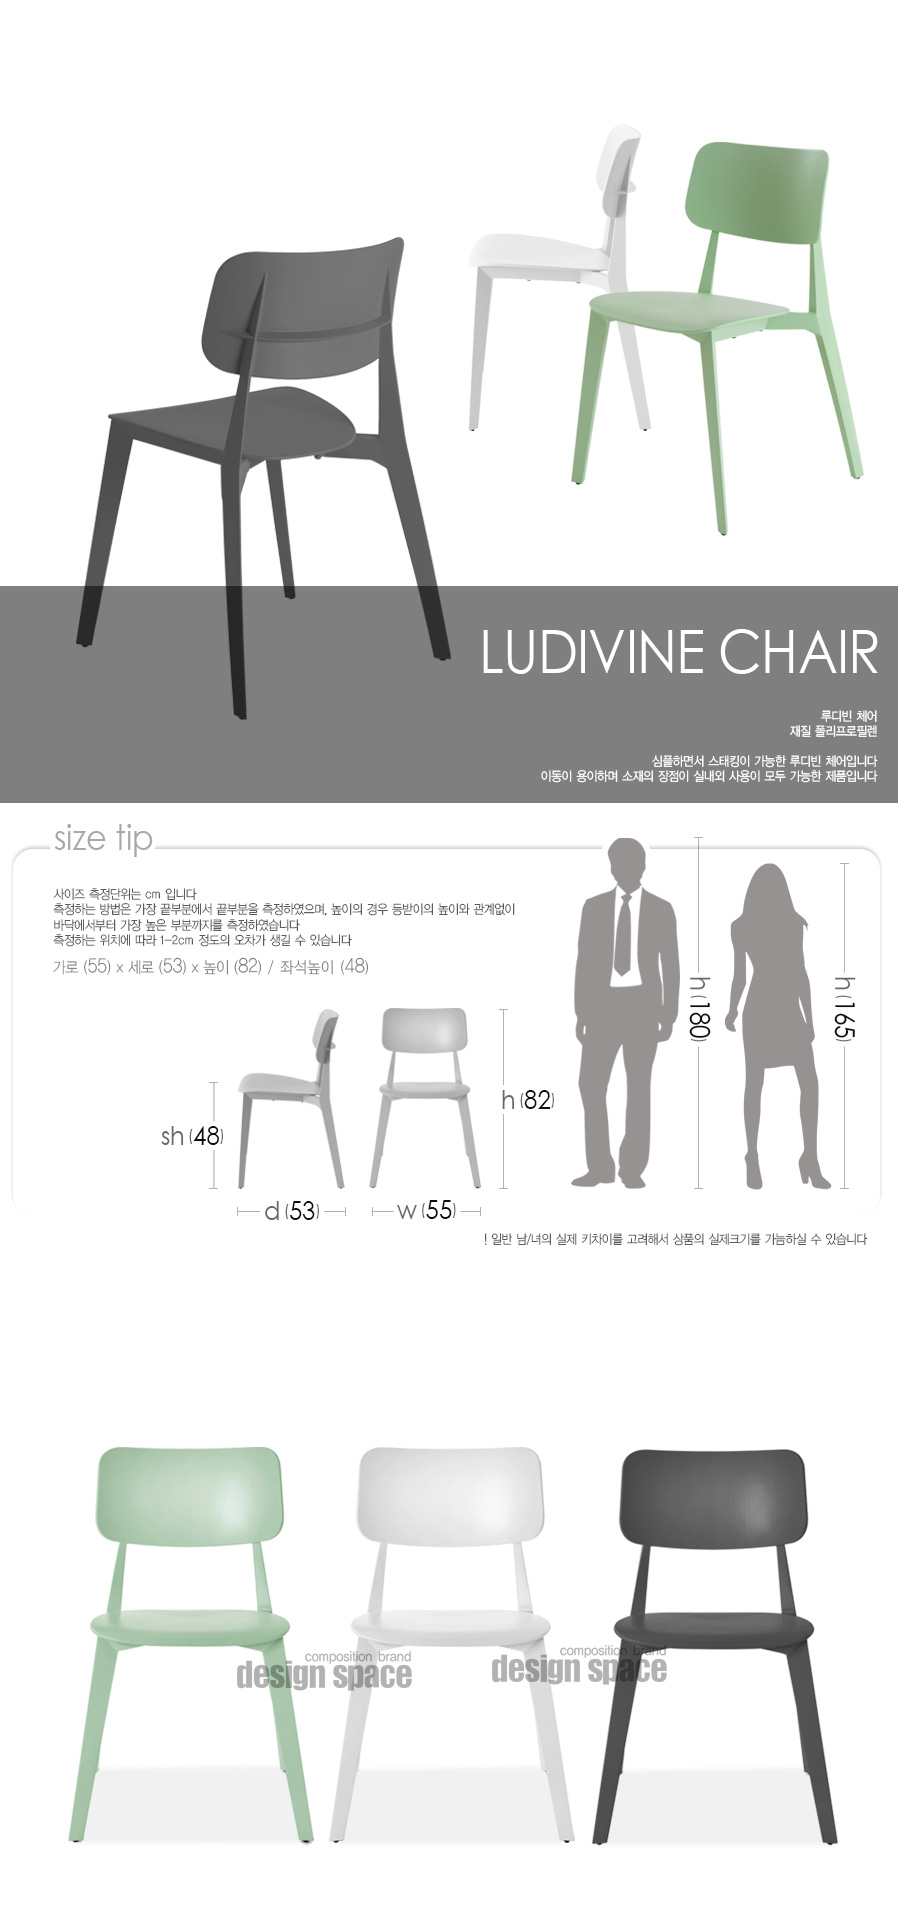 ludivine-chair_01.jpg